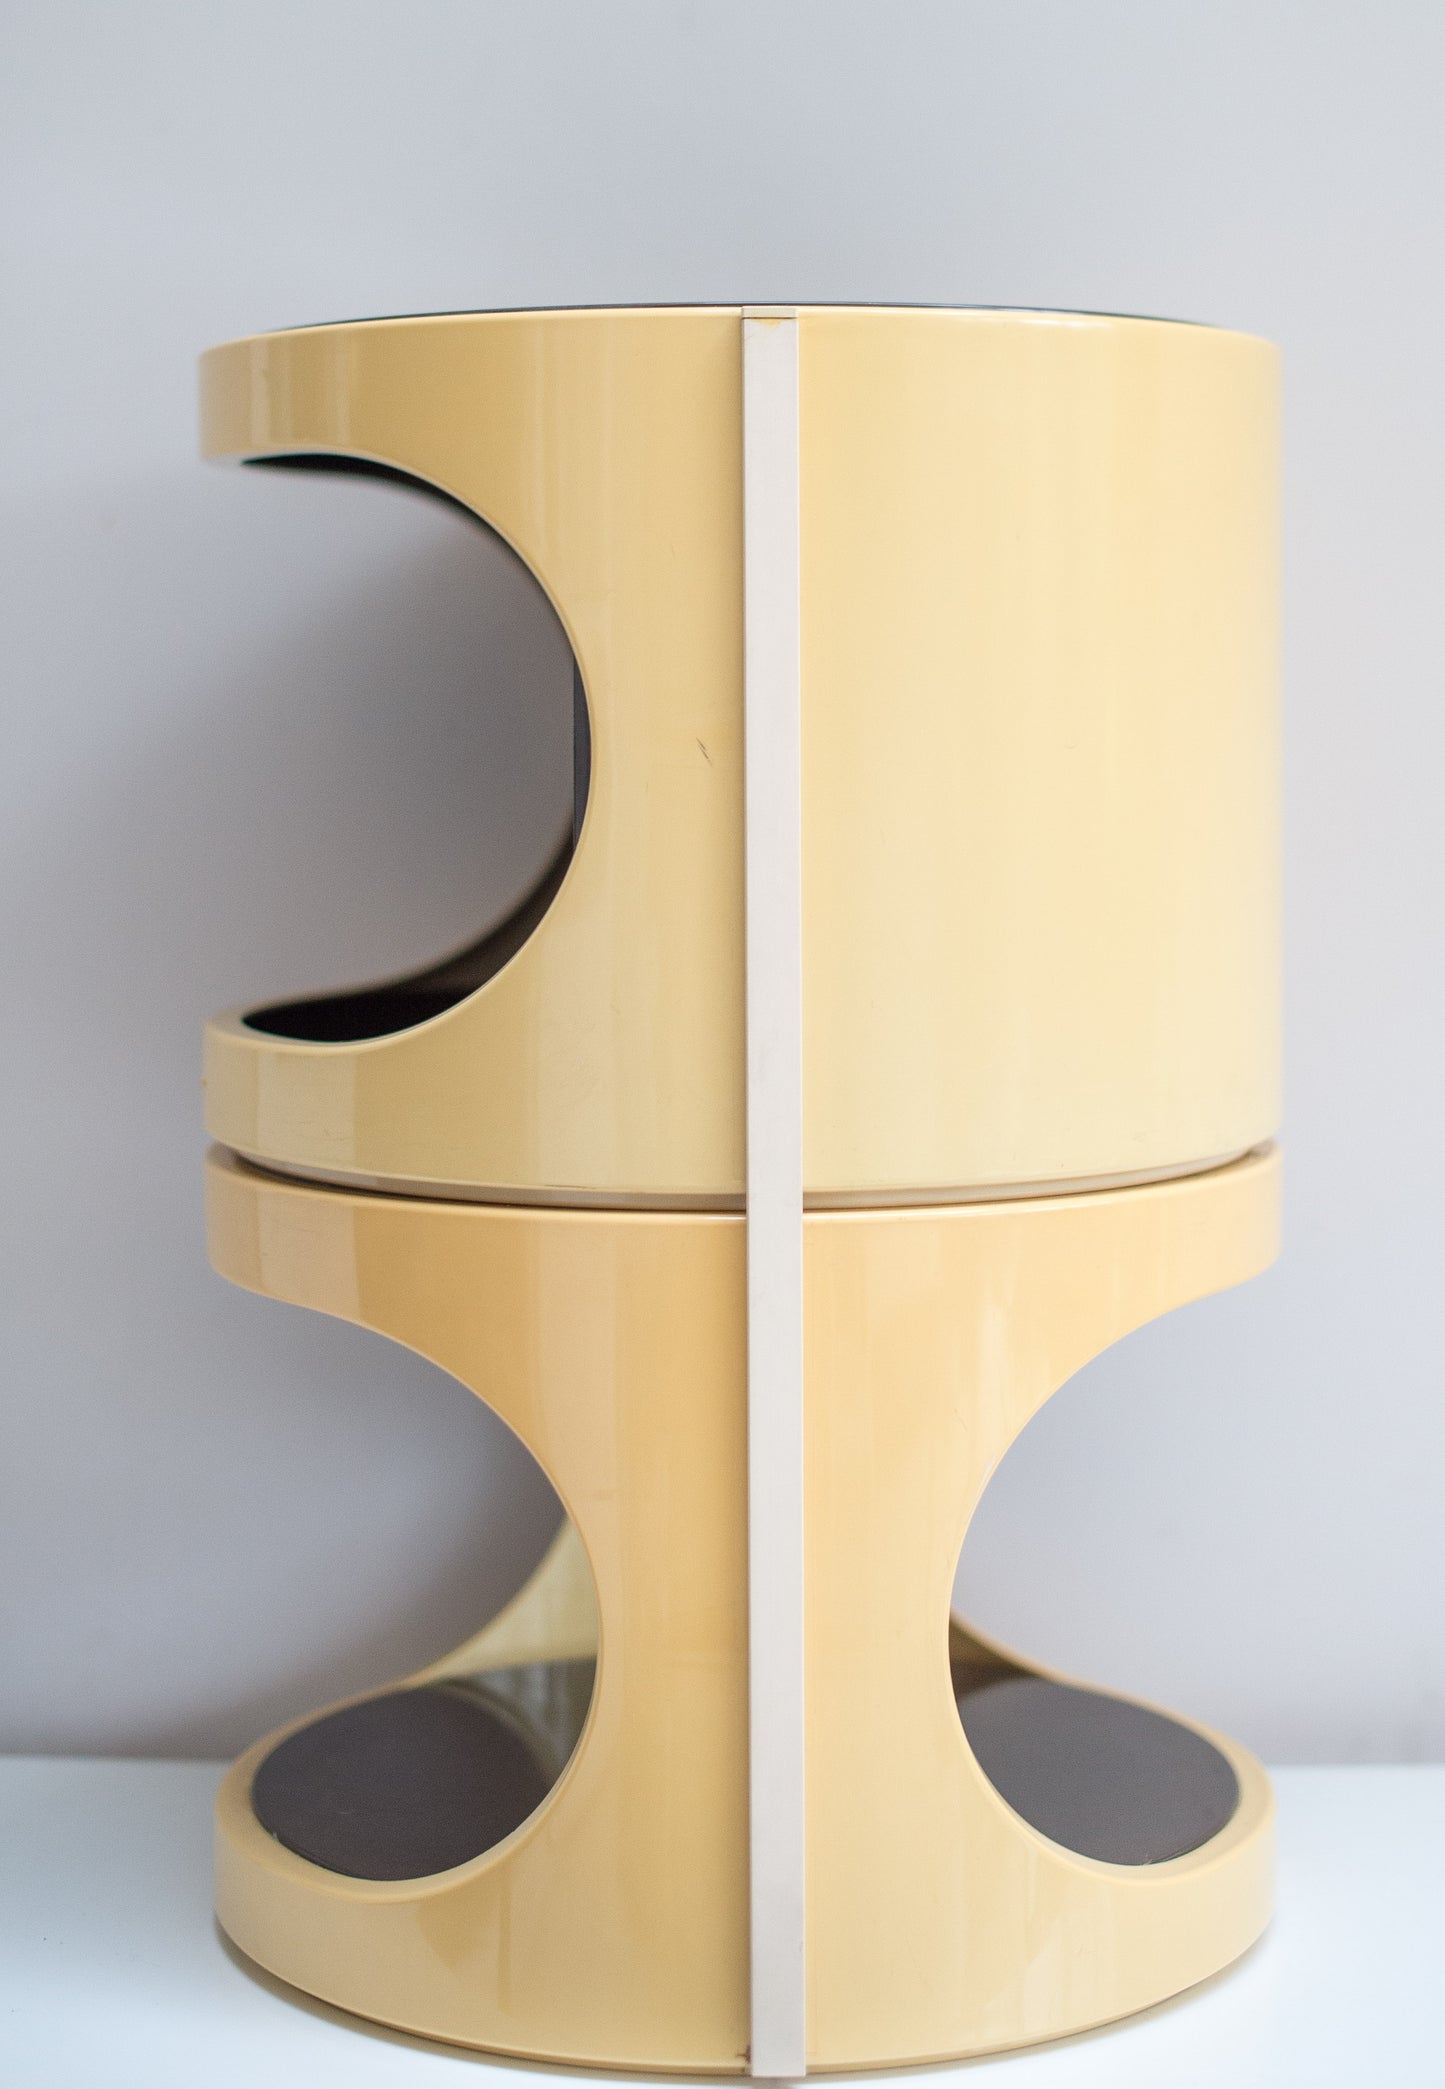 1970s cylindrical table produced by Flair, Holland.